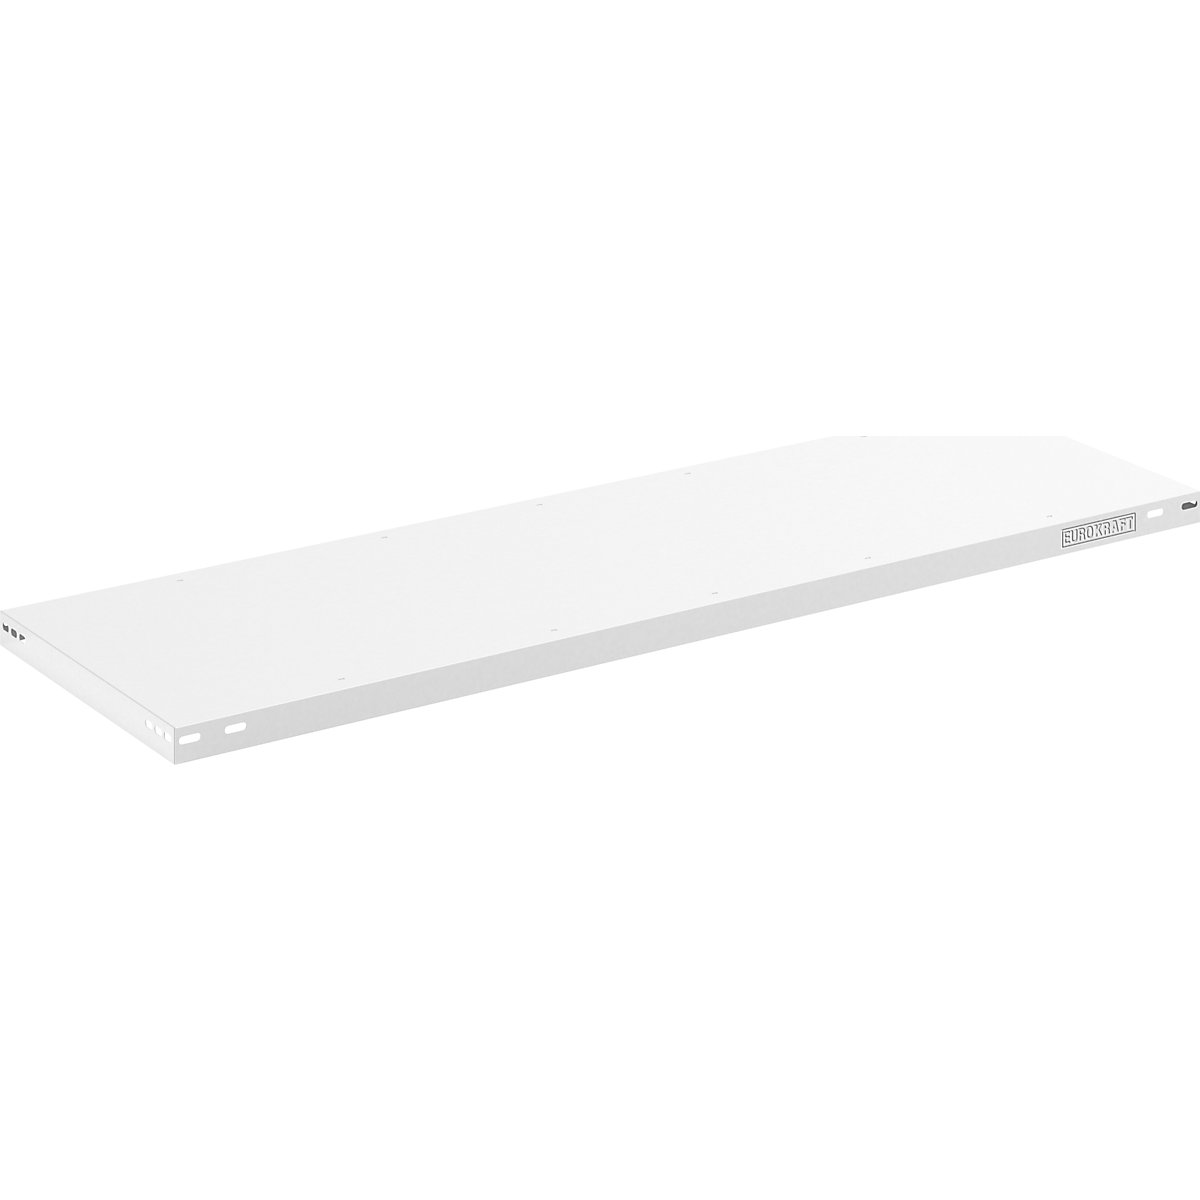 Shelf, max. load 350 kg – eurokraft pro, light grey, WxD 1300 x 500 mm